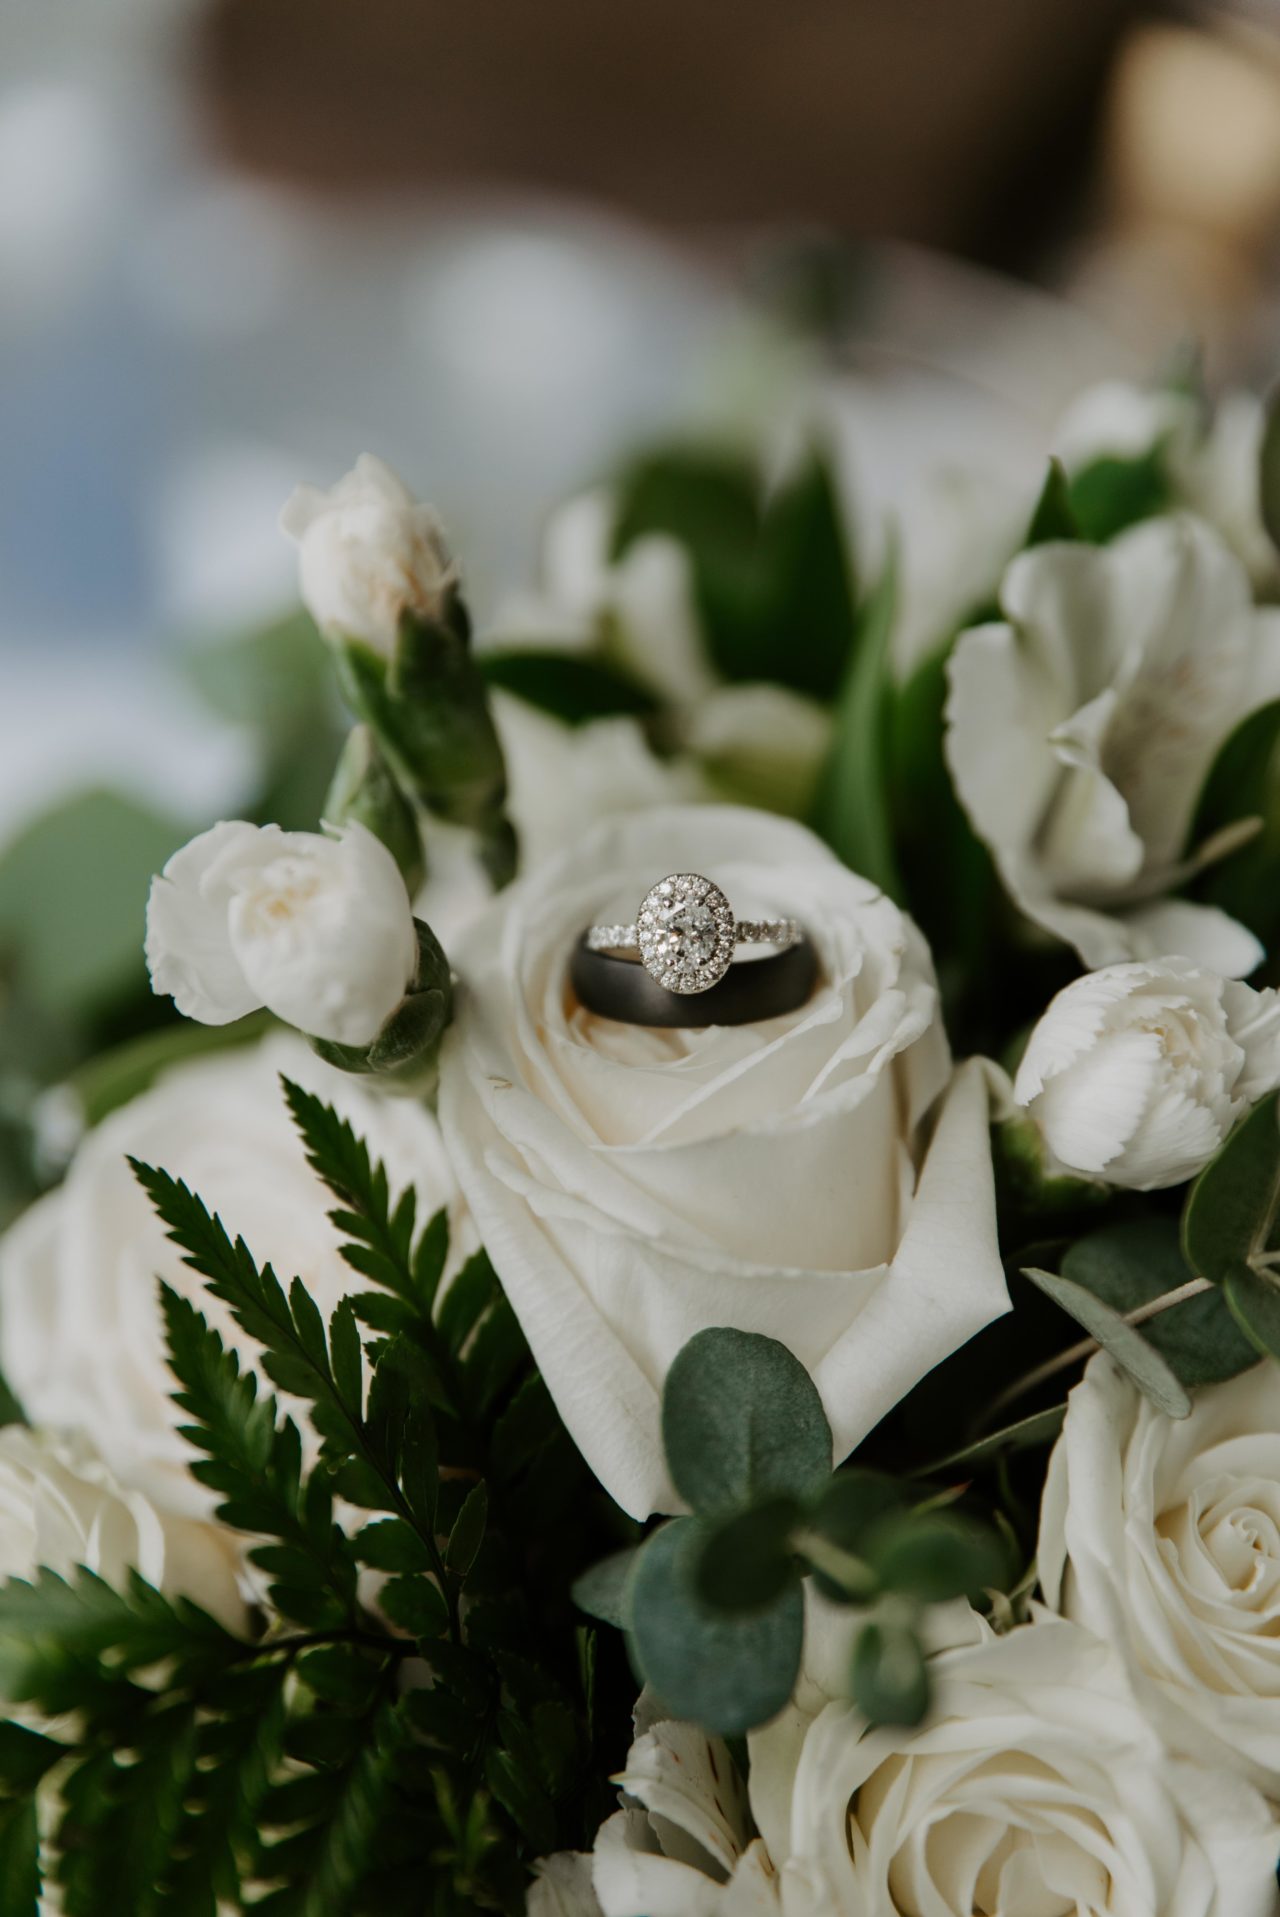 Engagement Ring Vs Wedding Ring